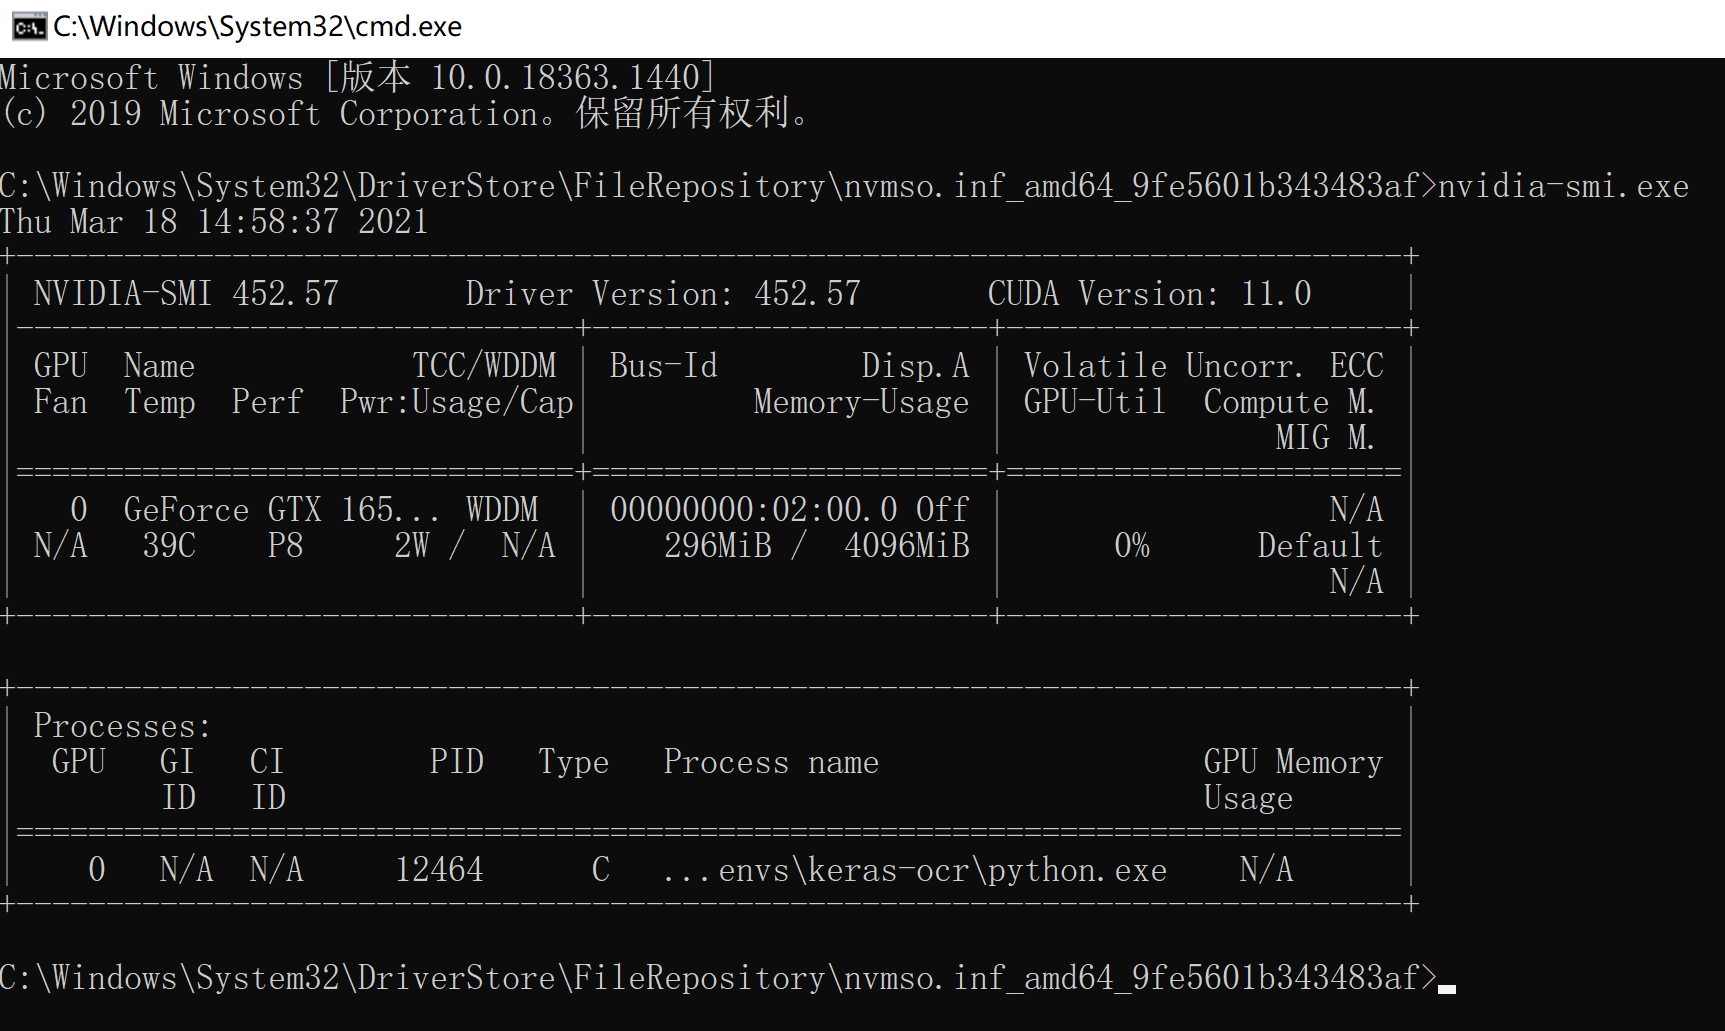 NVIDIA-SMI 525.85.12. Torch Version CUDA. NVIDIA-SMI CUDNN Version. Torch not compiled with CUDA enabled.